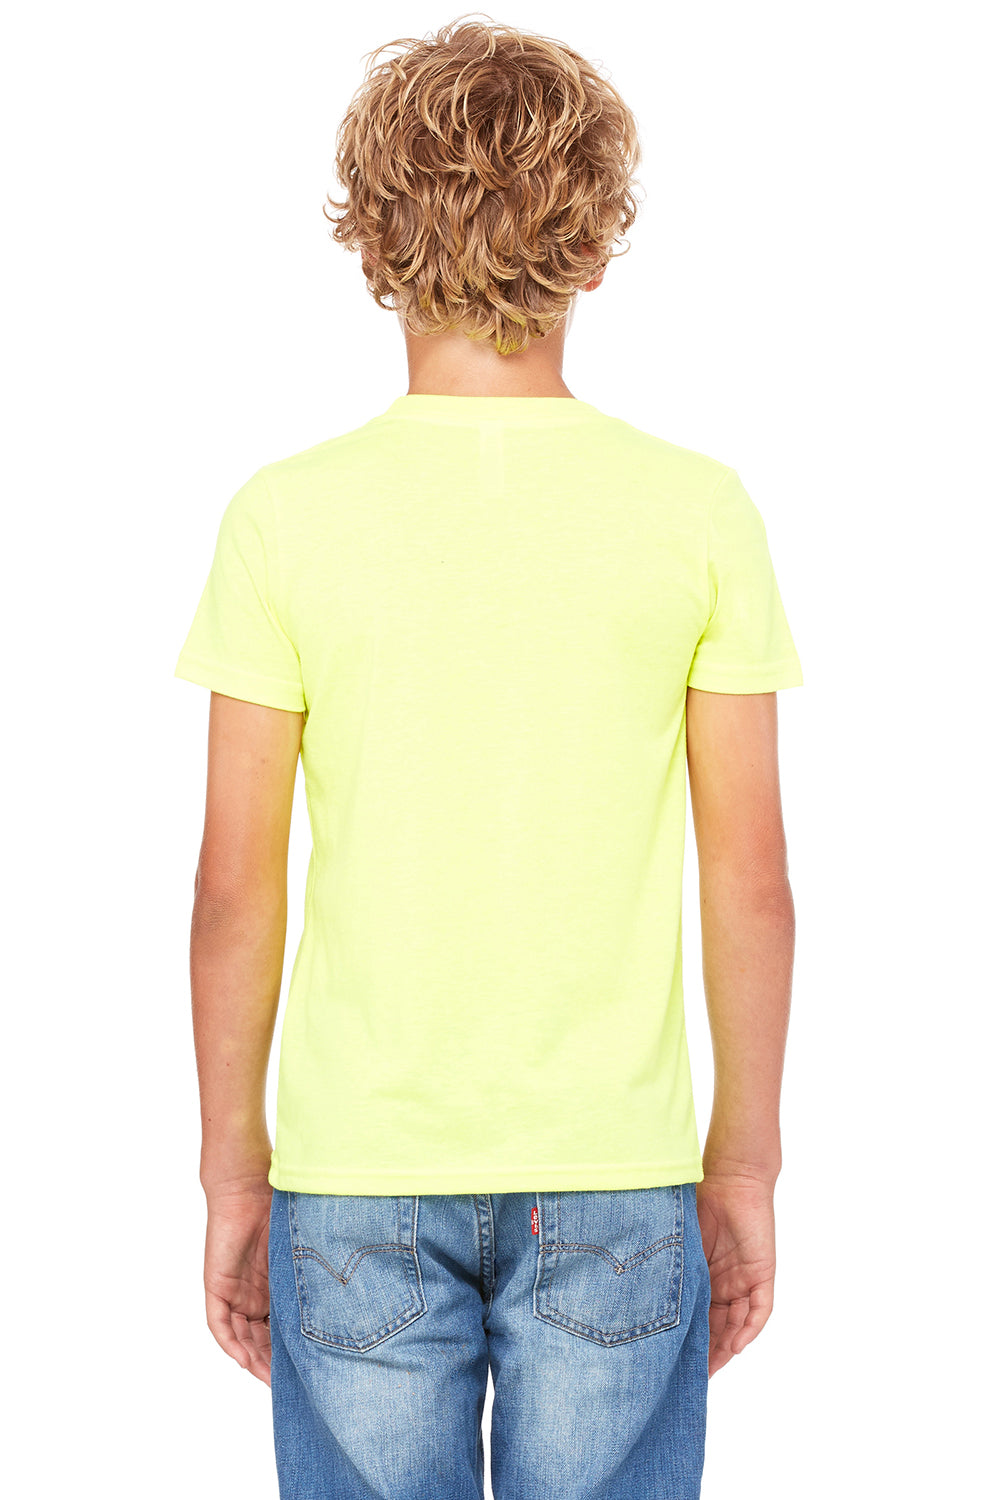 Bella + Canvas 3001Y Youth Jersey Short Sleeve Crewneck T-Shirt Neon Yellow Model Back